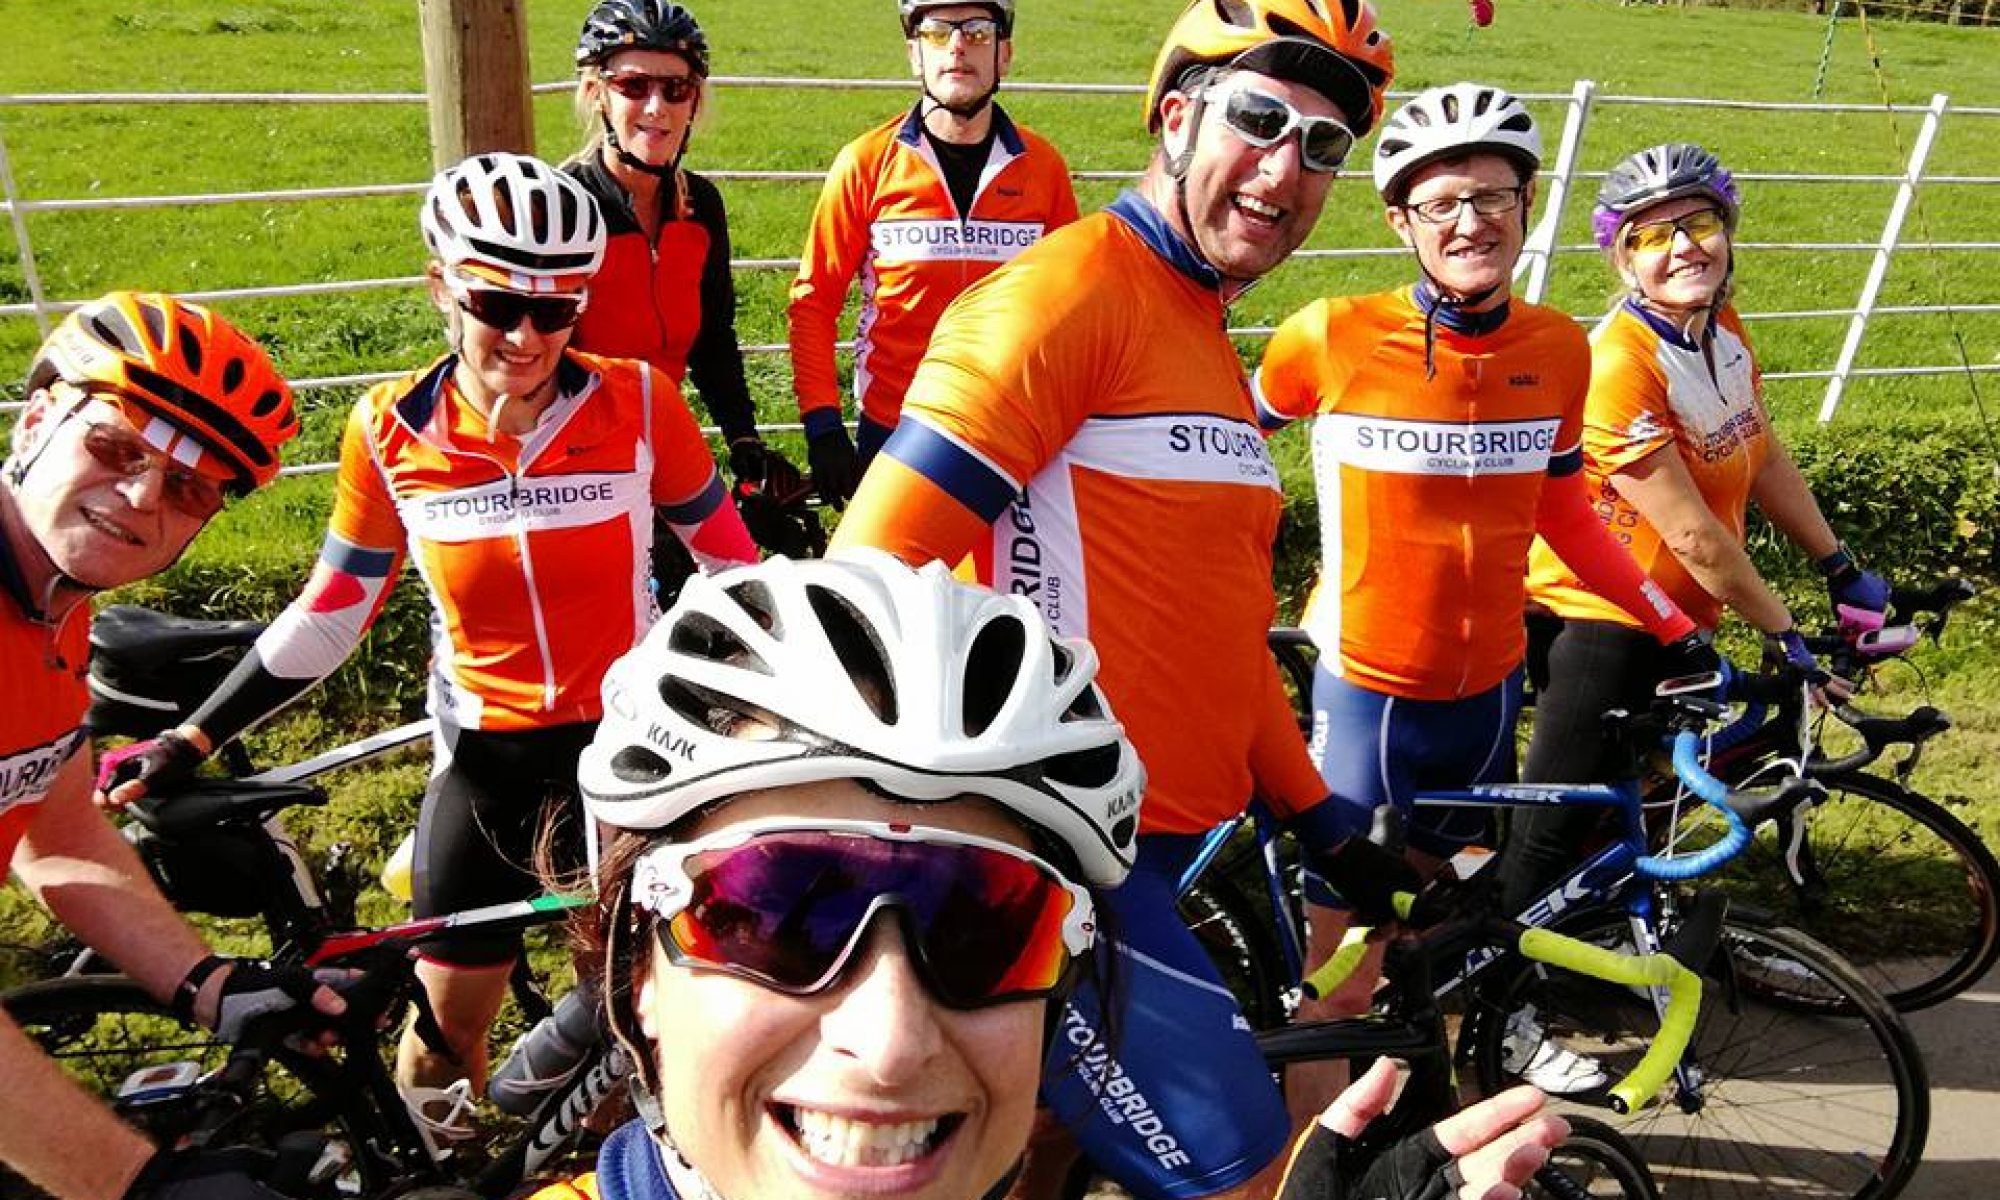 Stourbridge Cycling Club